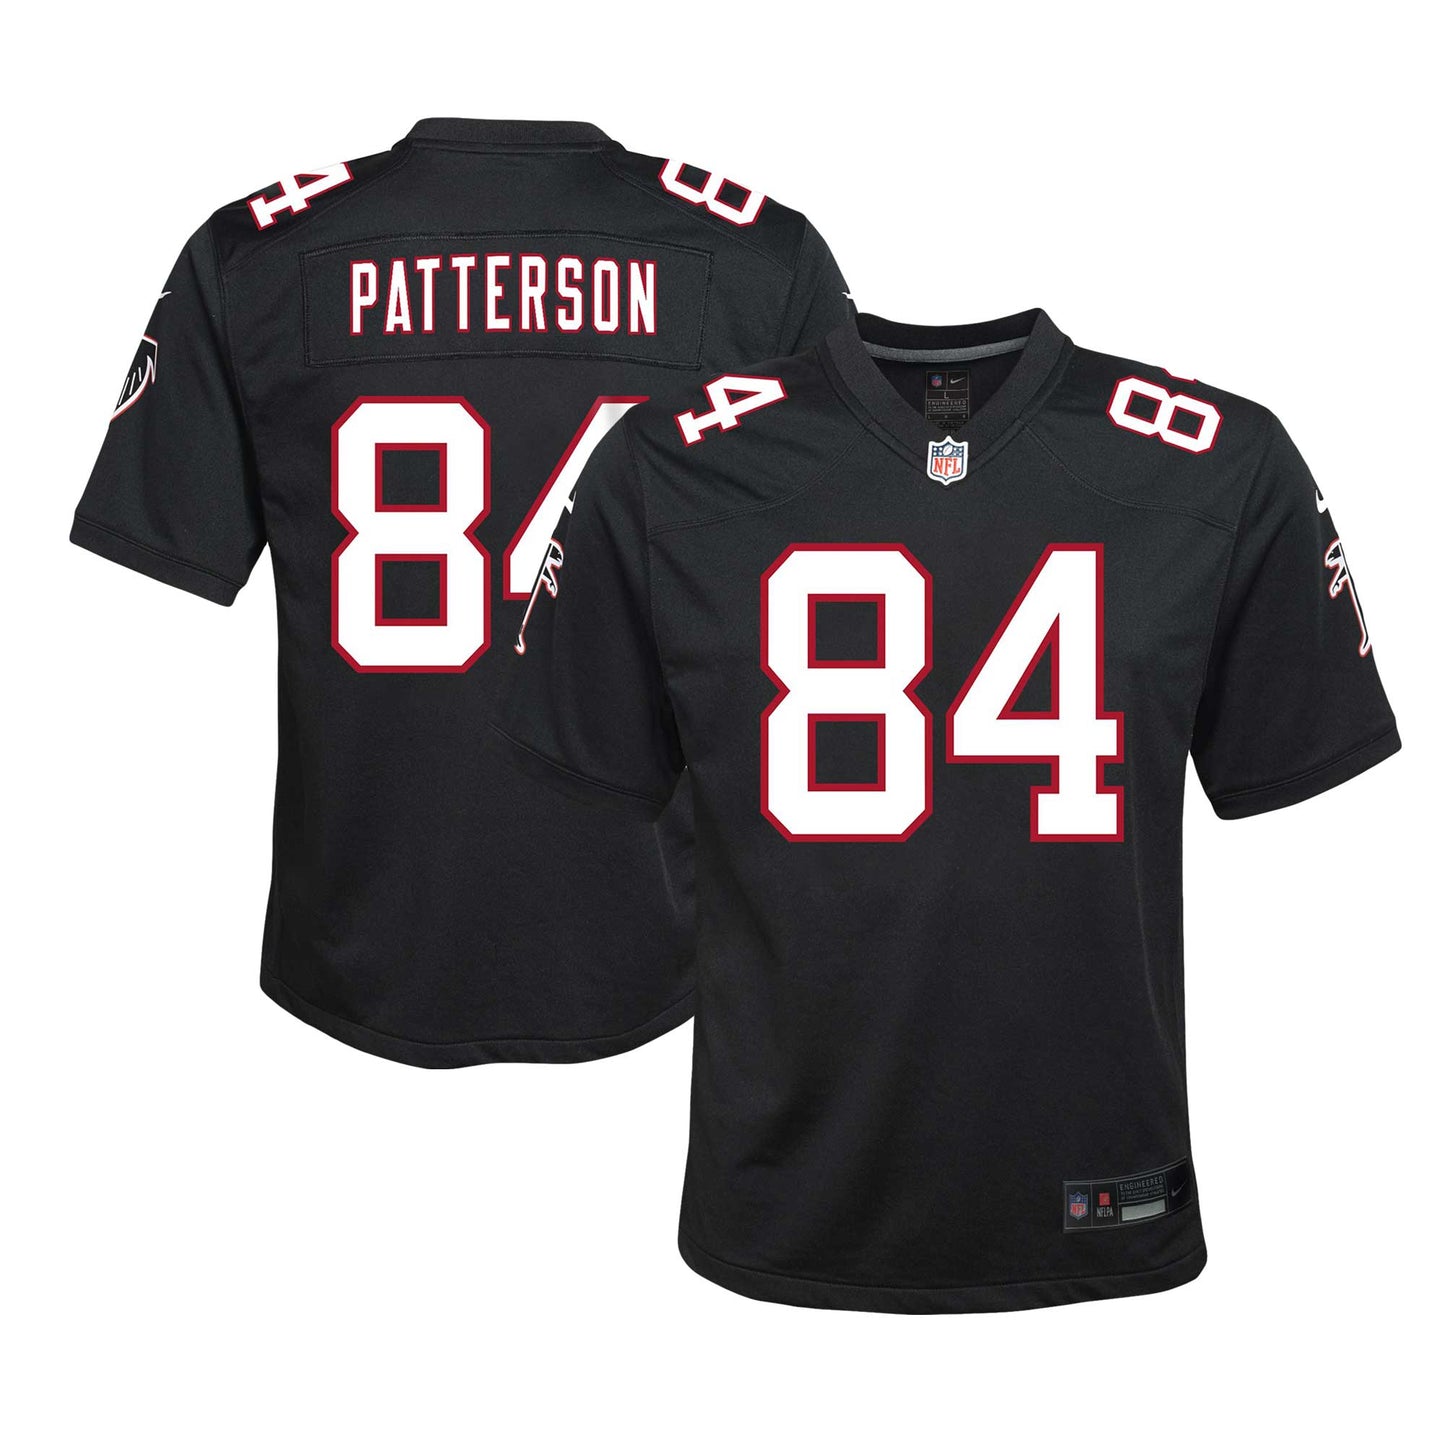 Cordarrelle Patterson Atlanta Falcons Nike Youth Game Jersey - Black